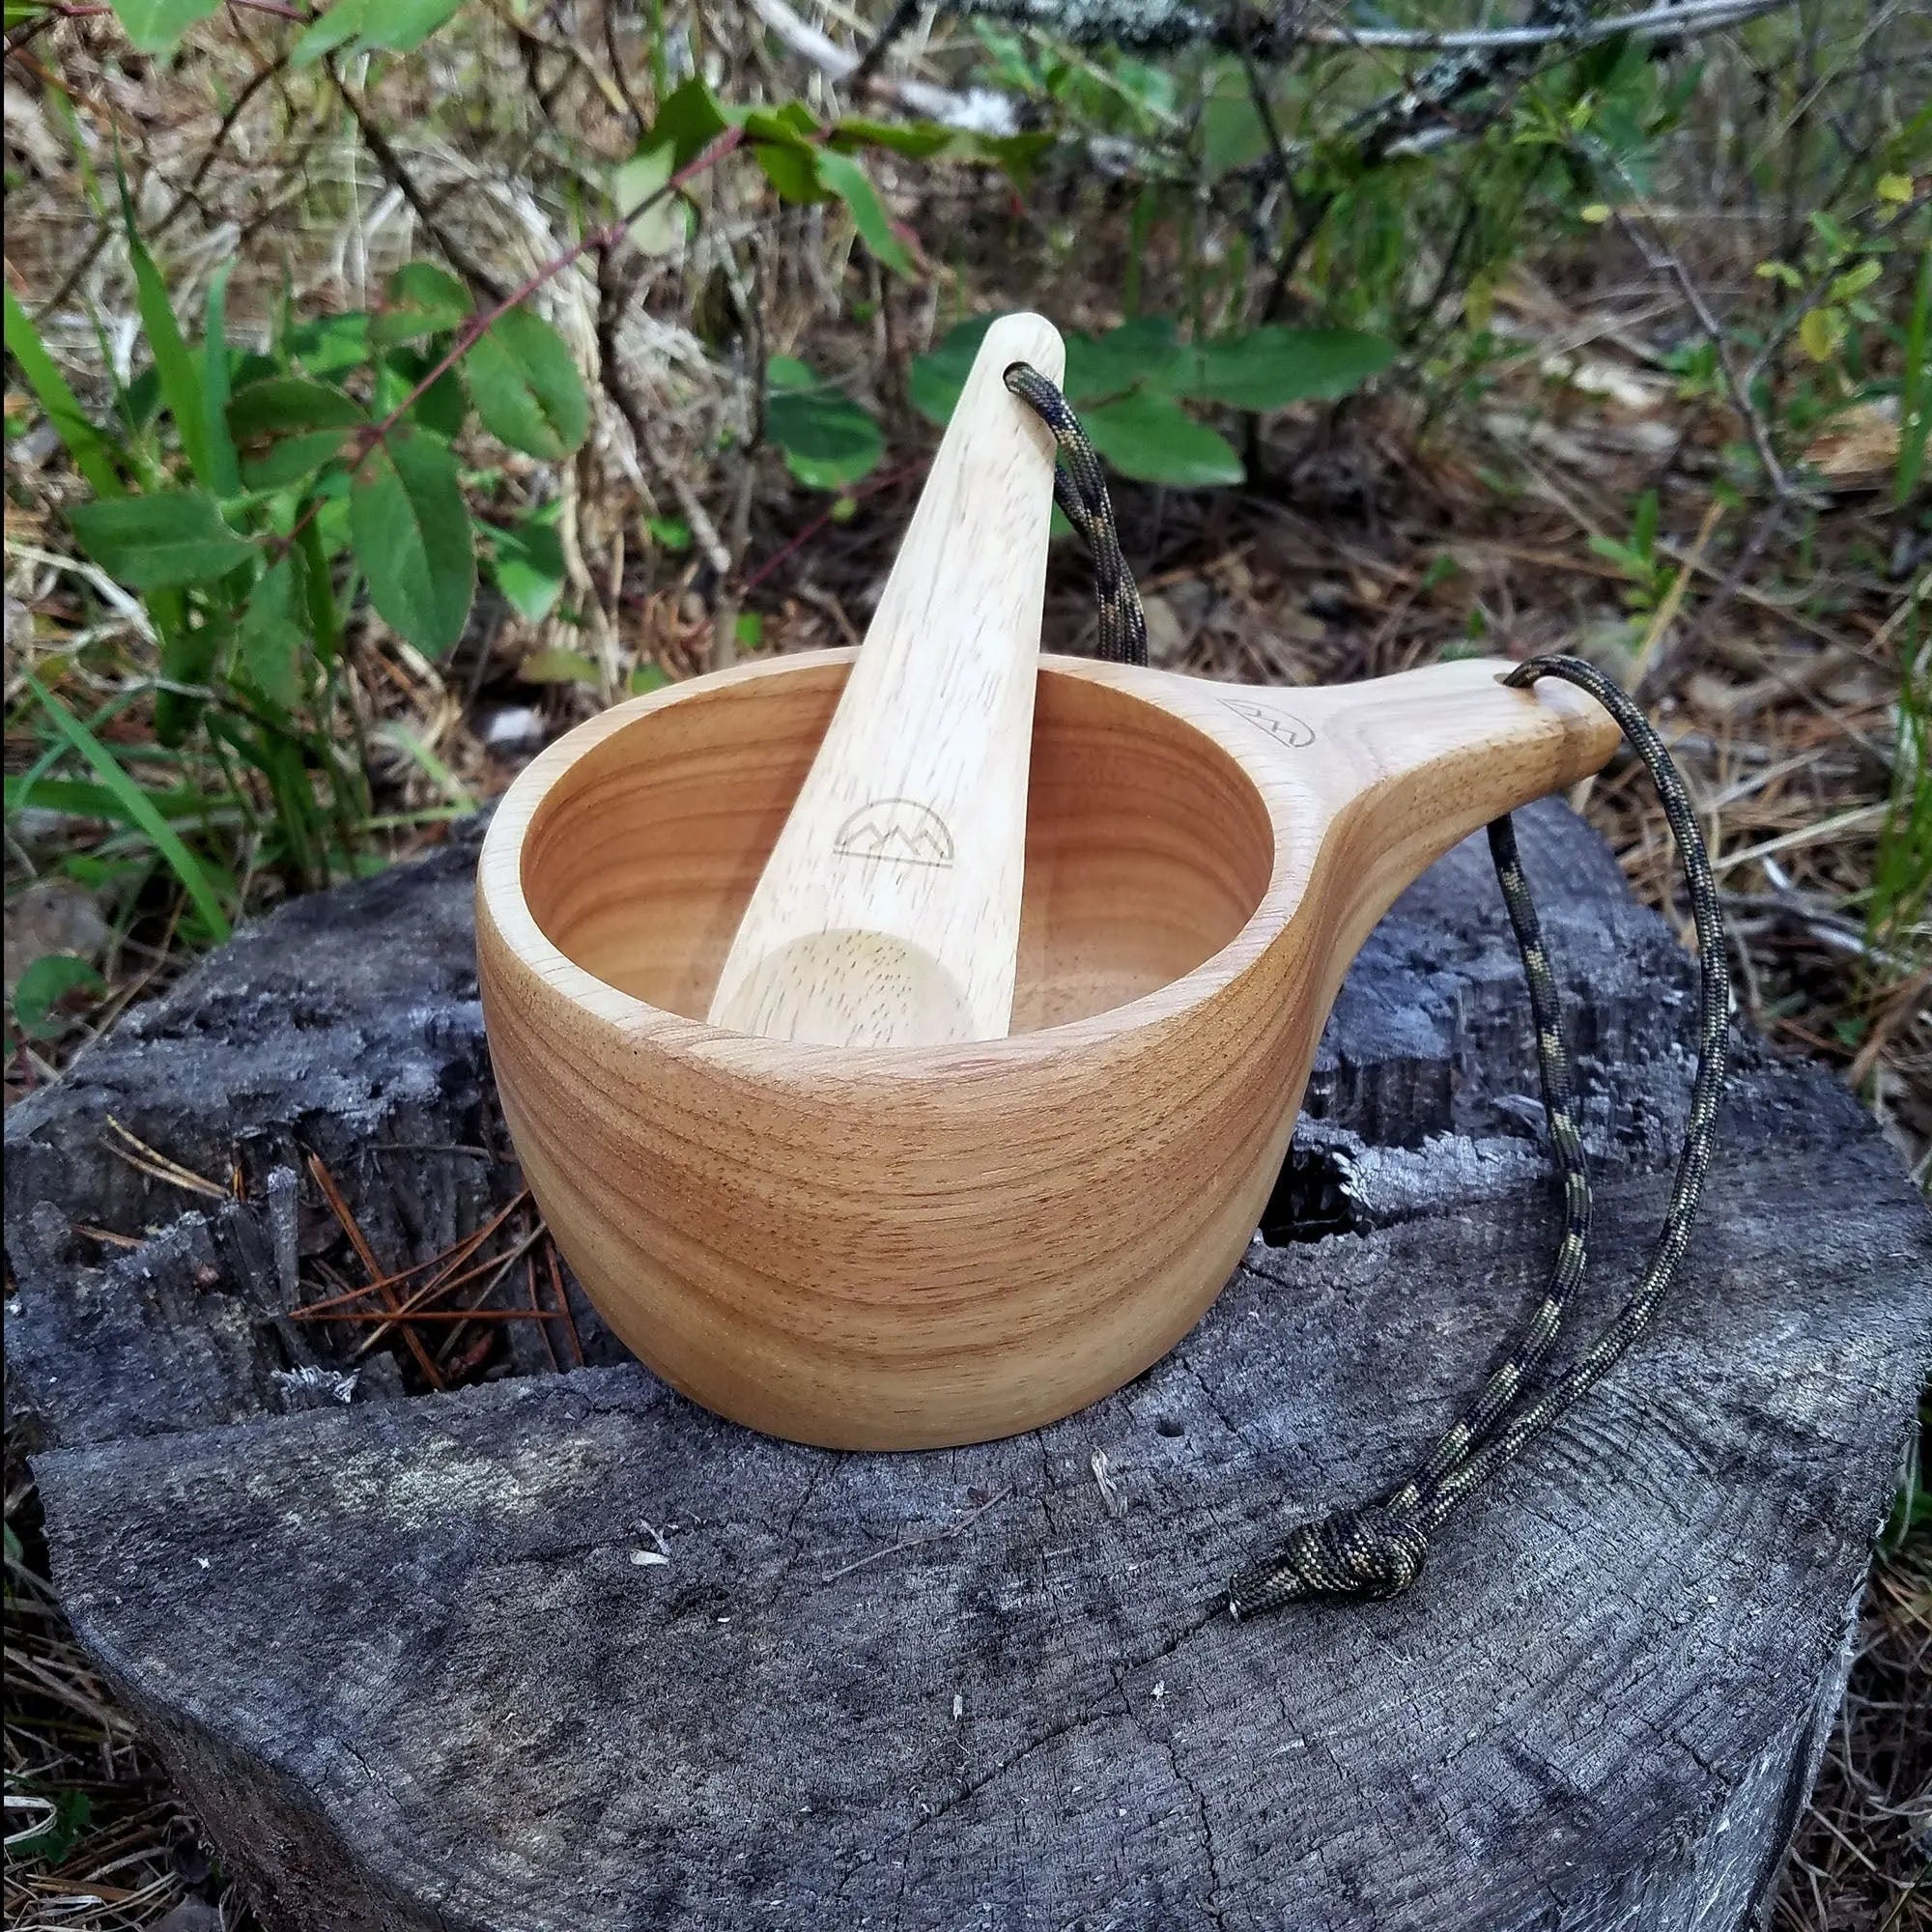 Wood Camp Mug & Spoon Set On Wooden